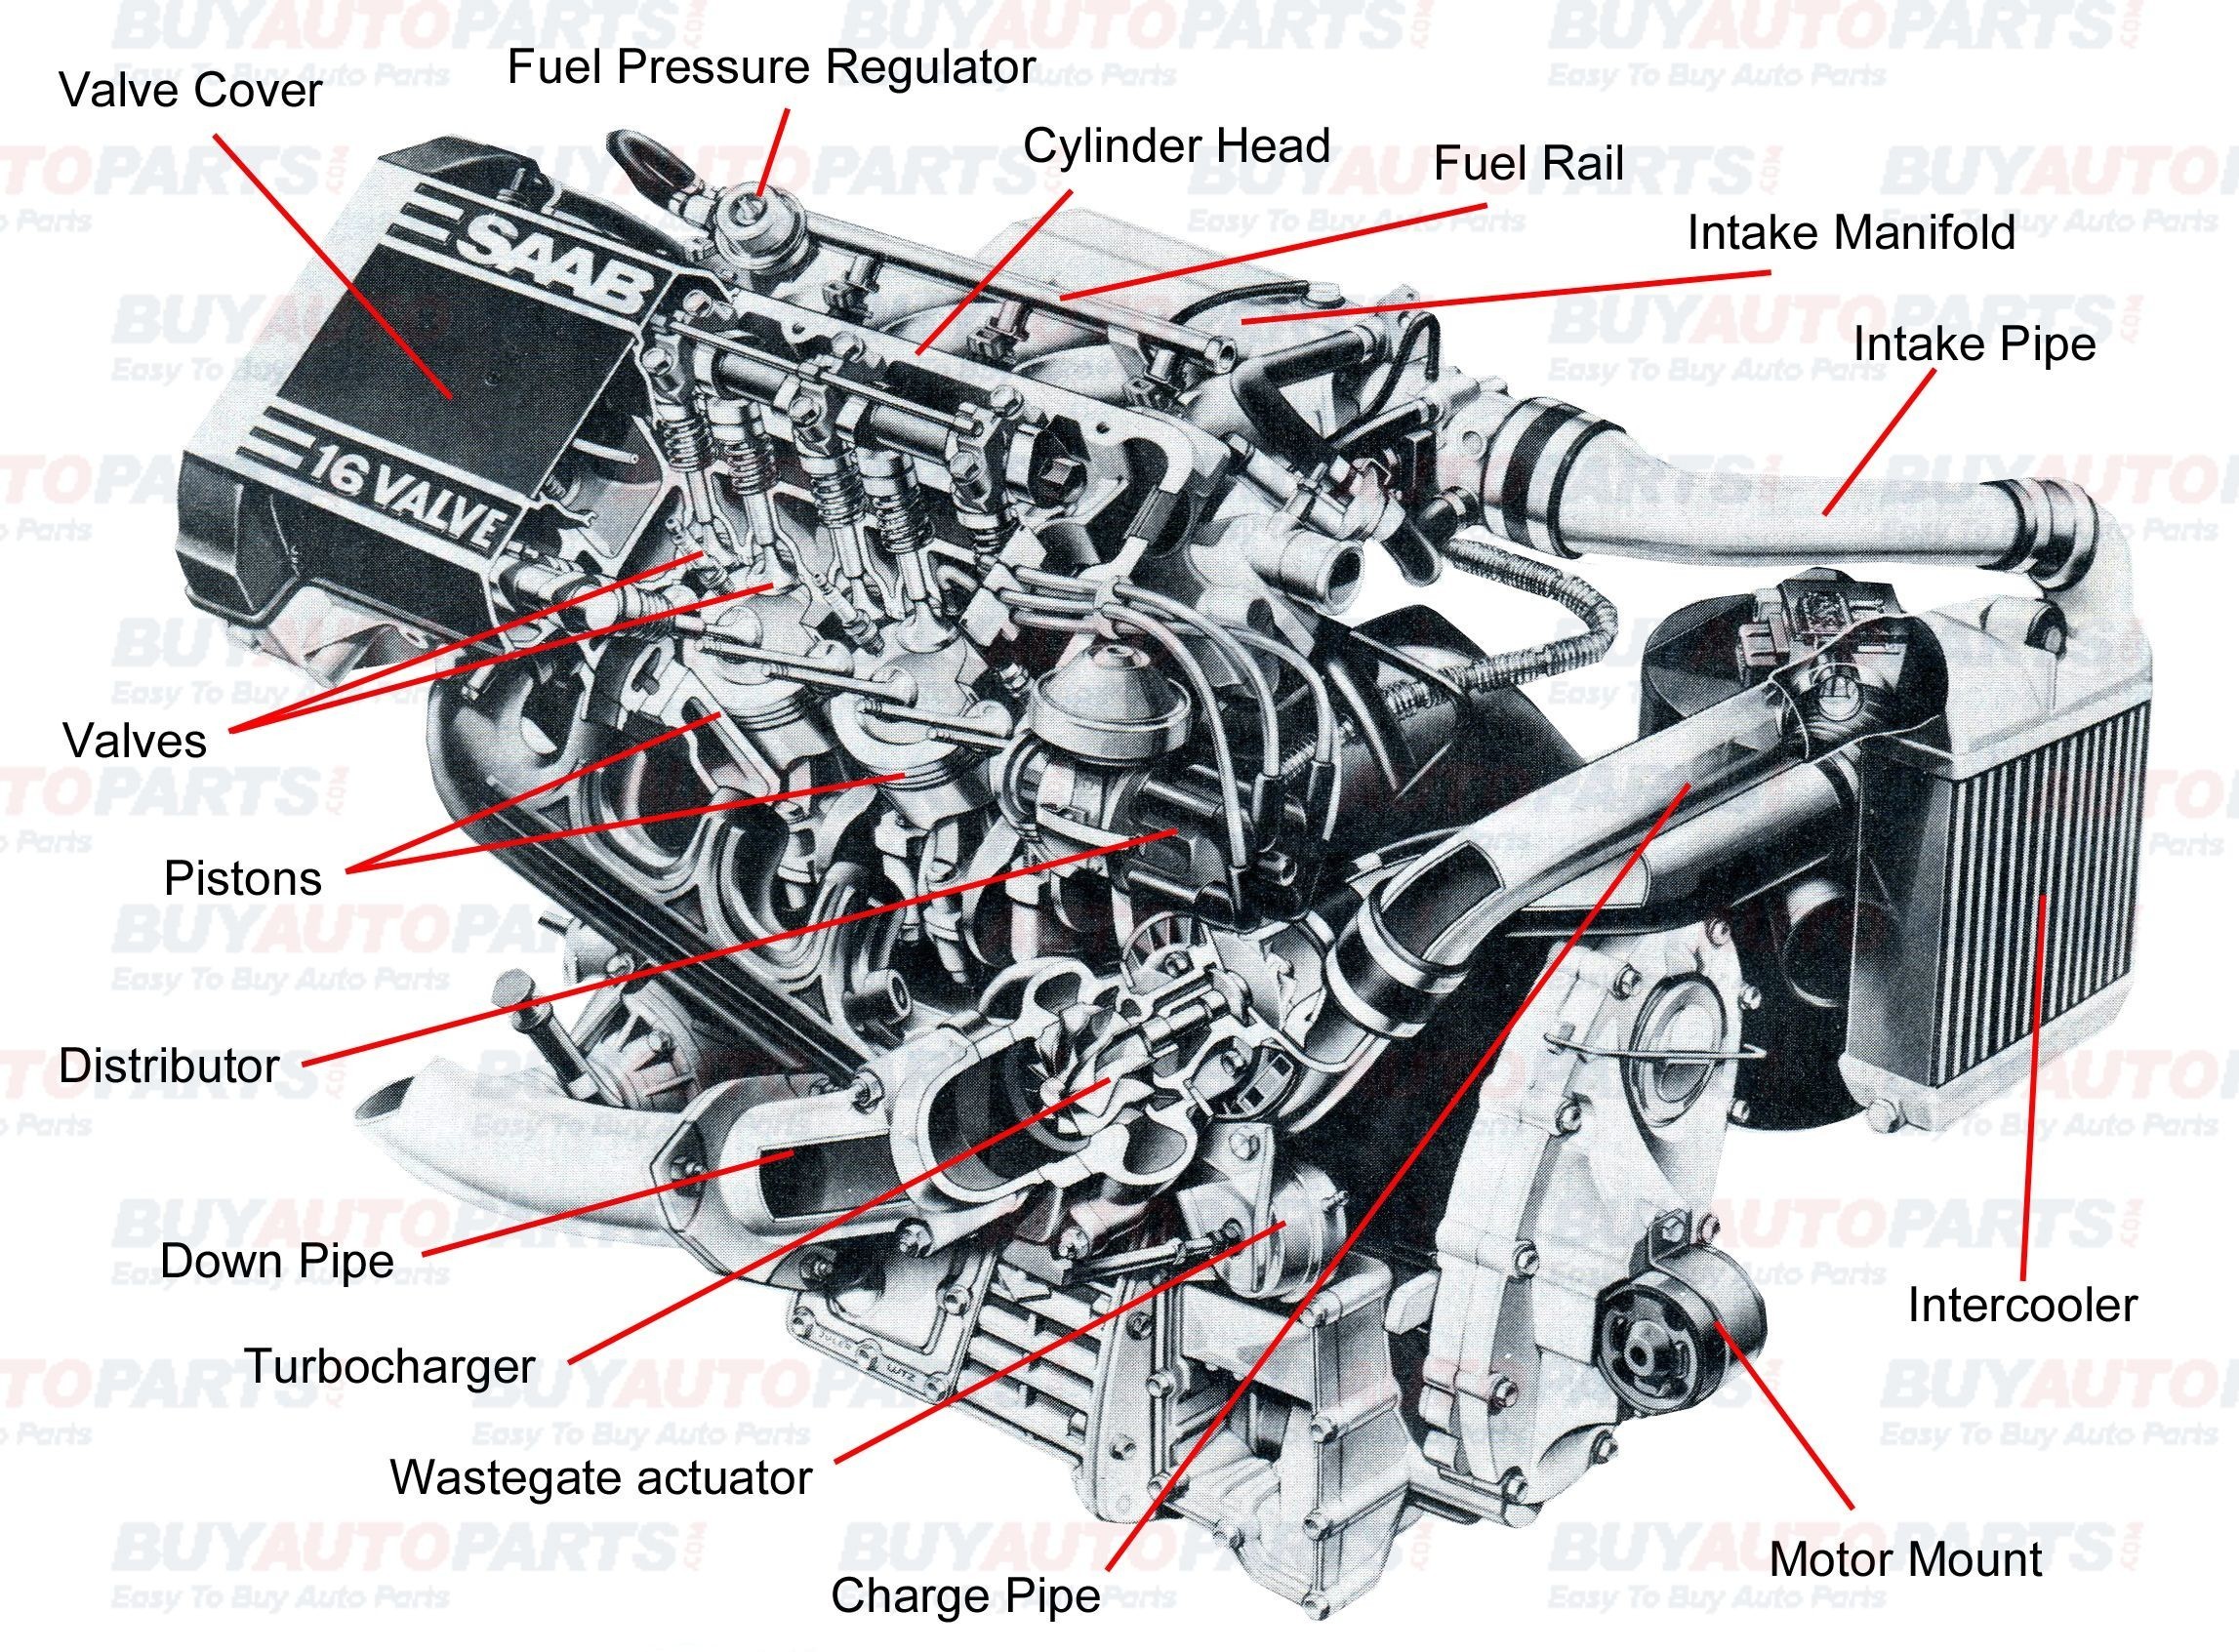 Car Engine Labeled Diagram Car Parts Labeled Diagram Car Parts Diagram Names – My Wiring Diagram Of Car Engine Labeled Diagram